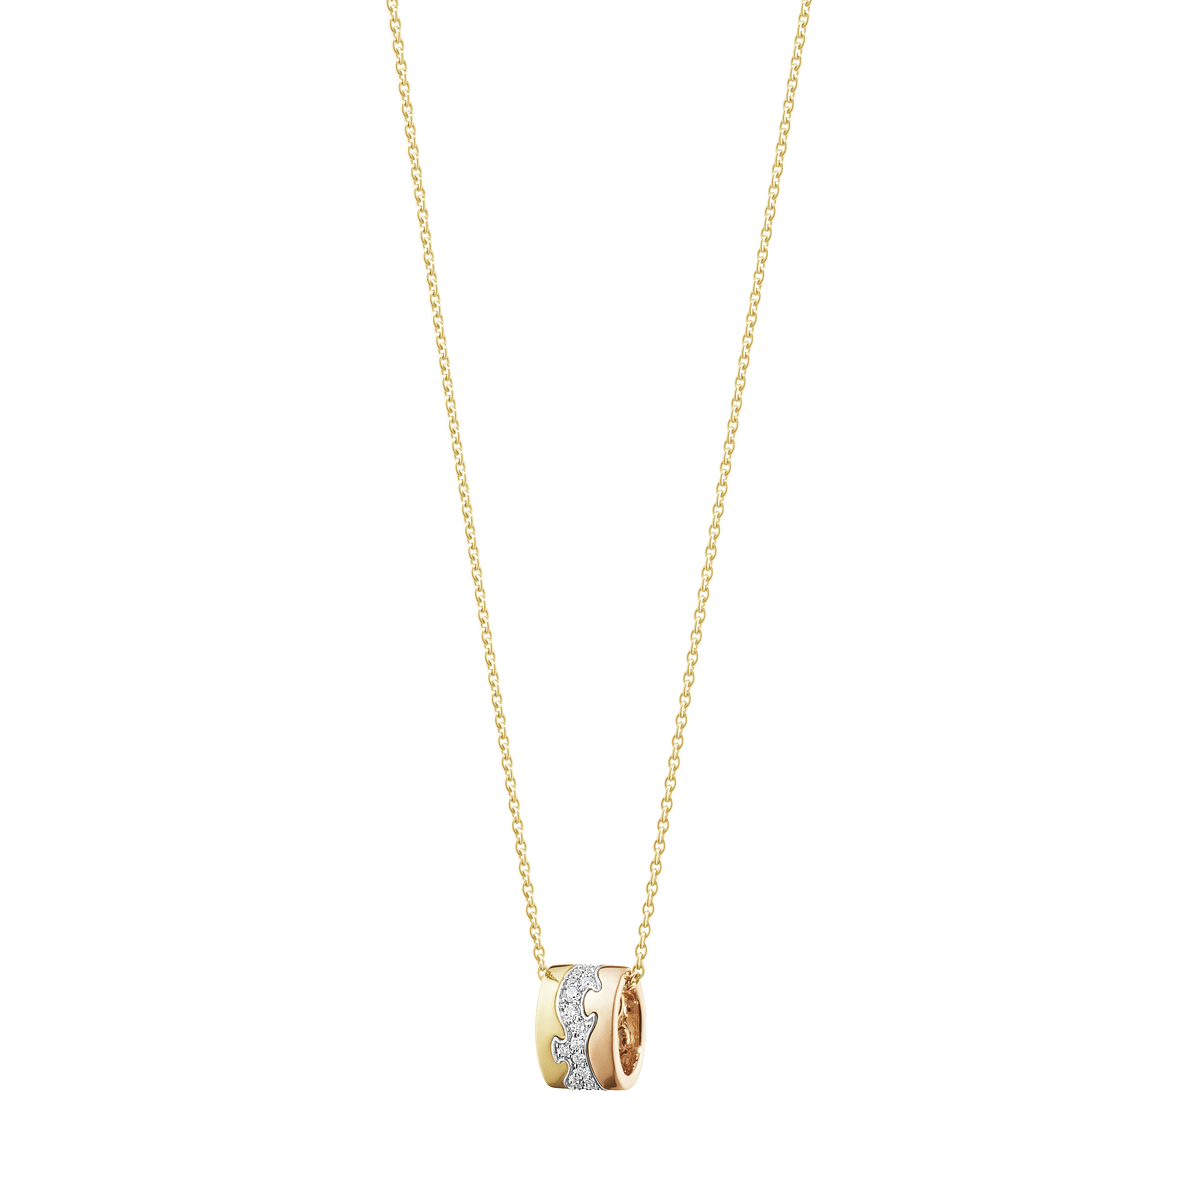 Fusion pendant with 0.19 CT diamonds | Georg Jensen